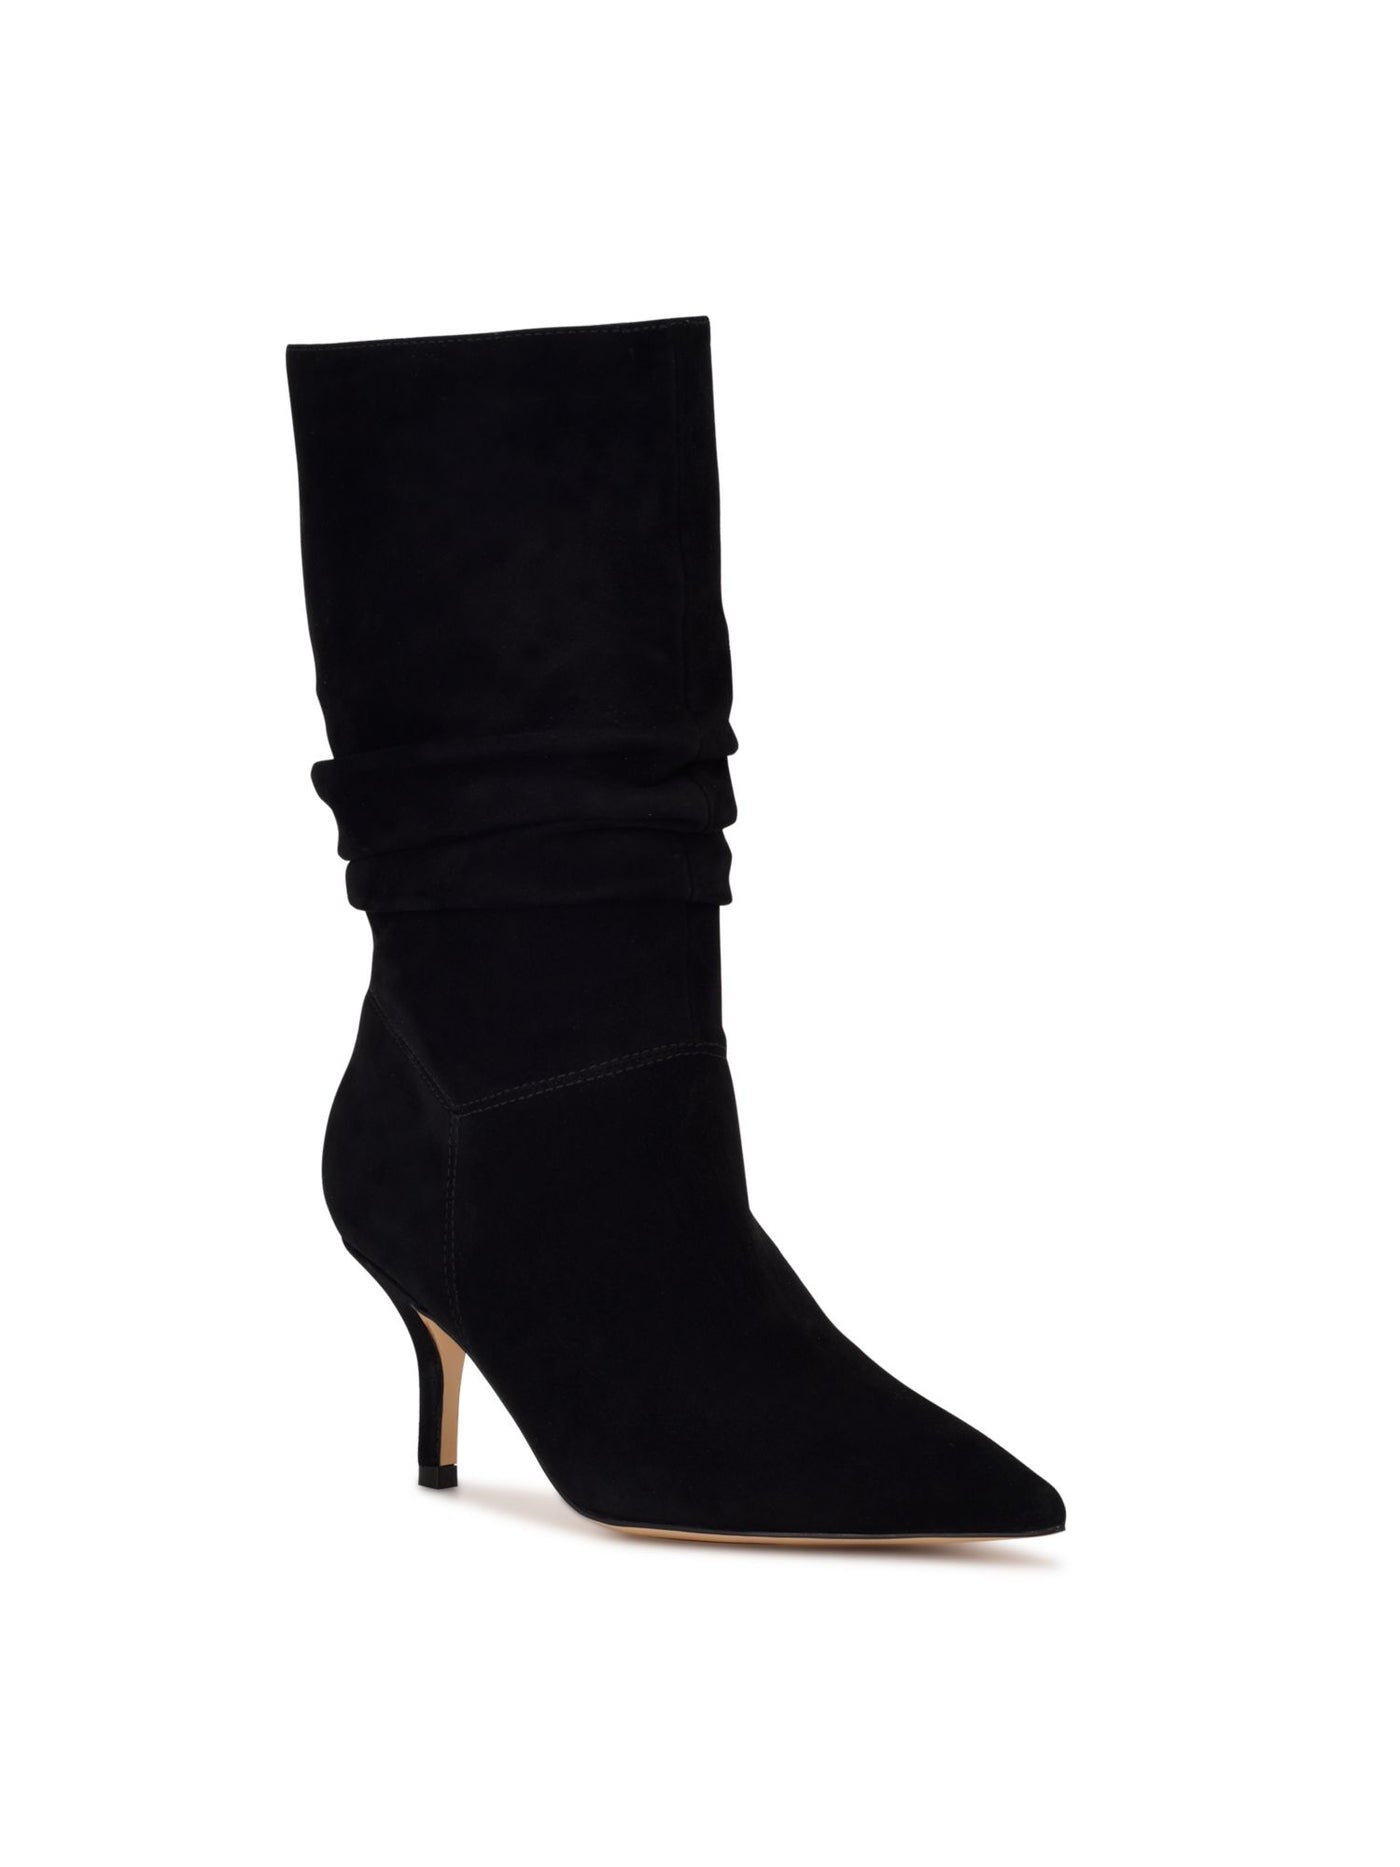 NINE WEST Womens Black Ruched Mycki Pointy Toe Stiletto Zip-Up Leather Dress Boots 7.5 M